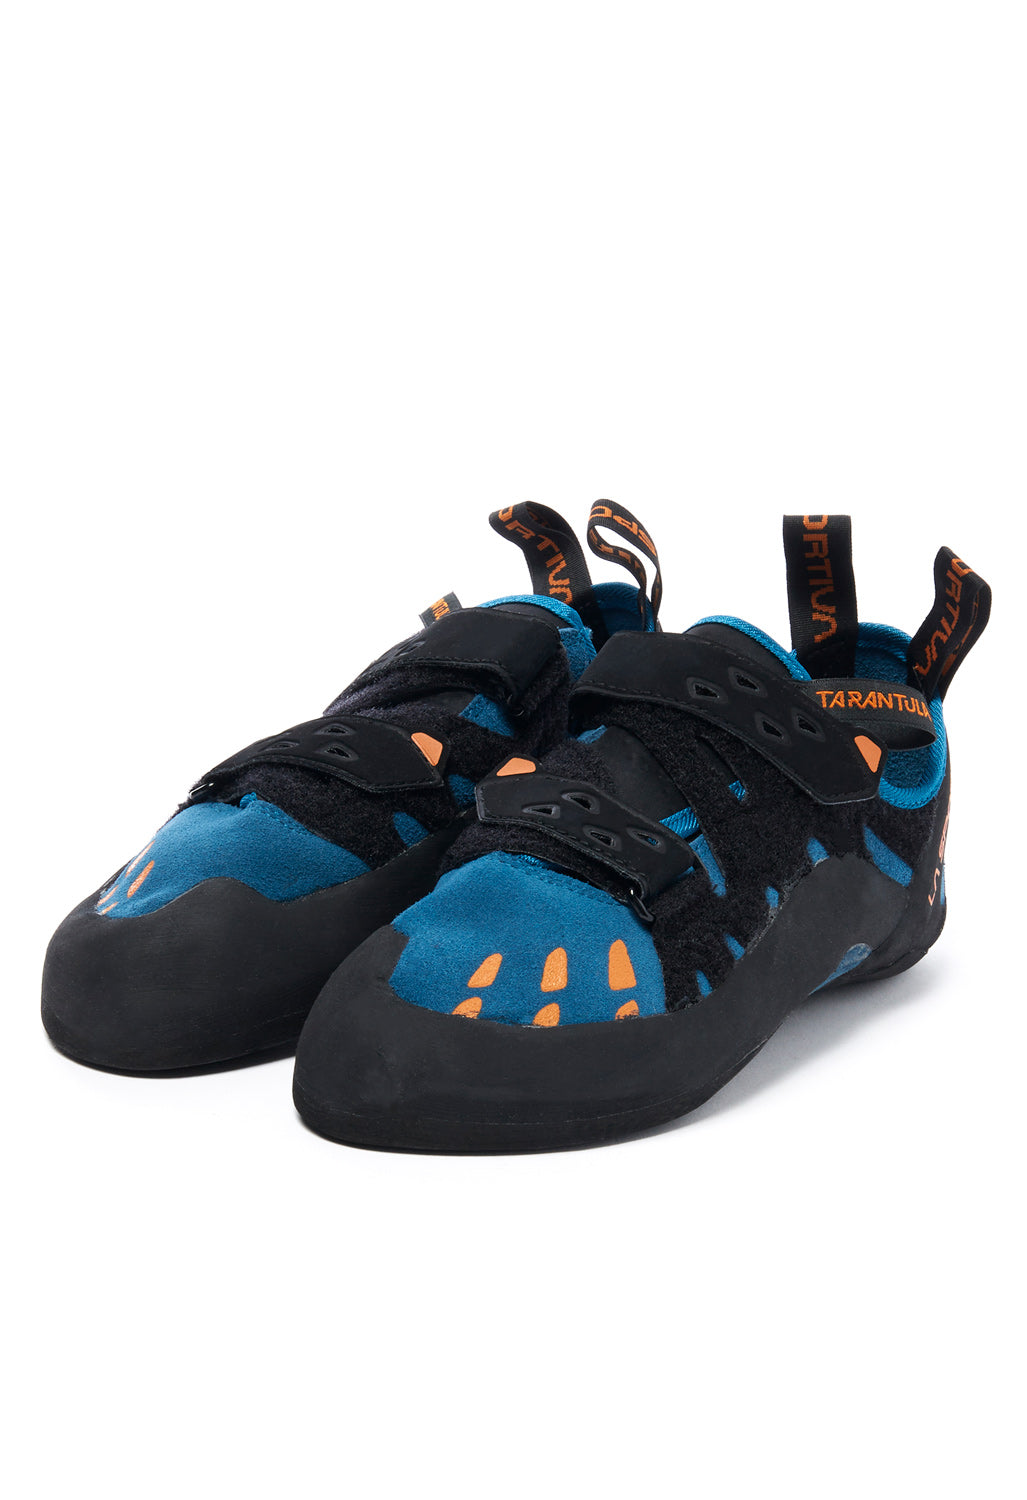 La Sportiva Tarantula Men's Shoes - Space Blue/Maple